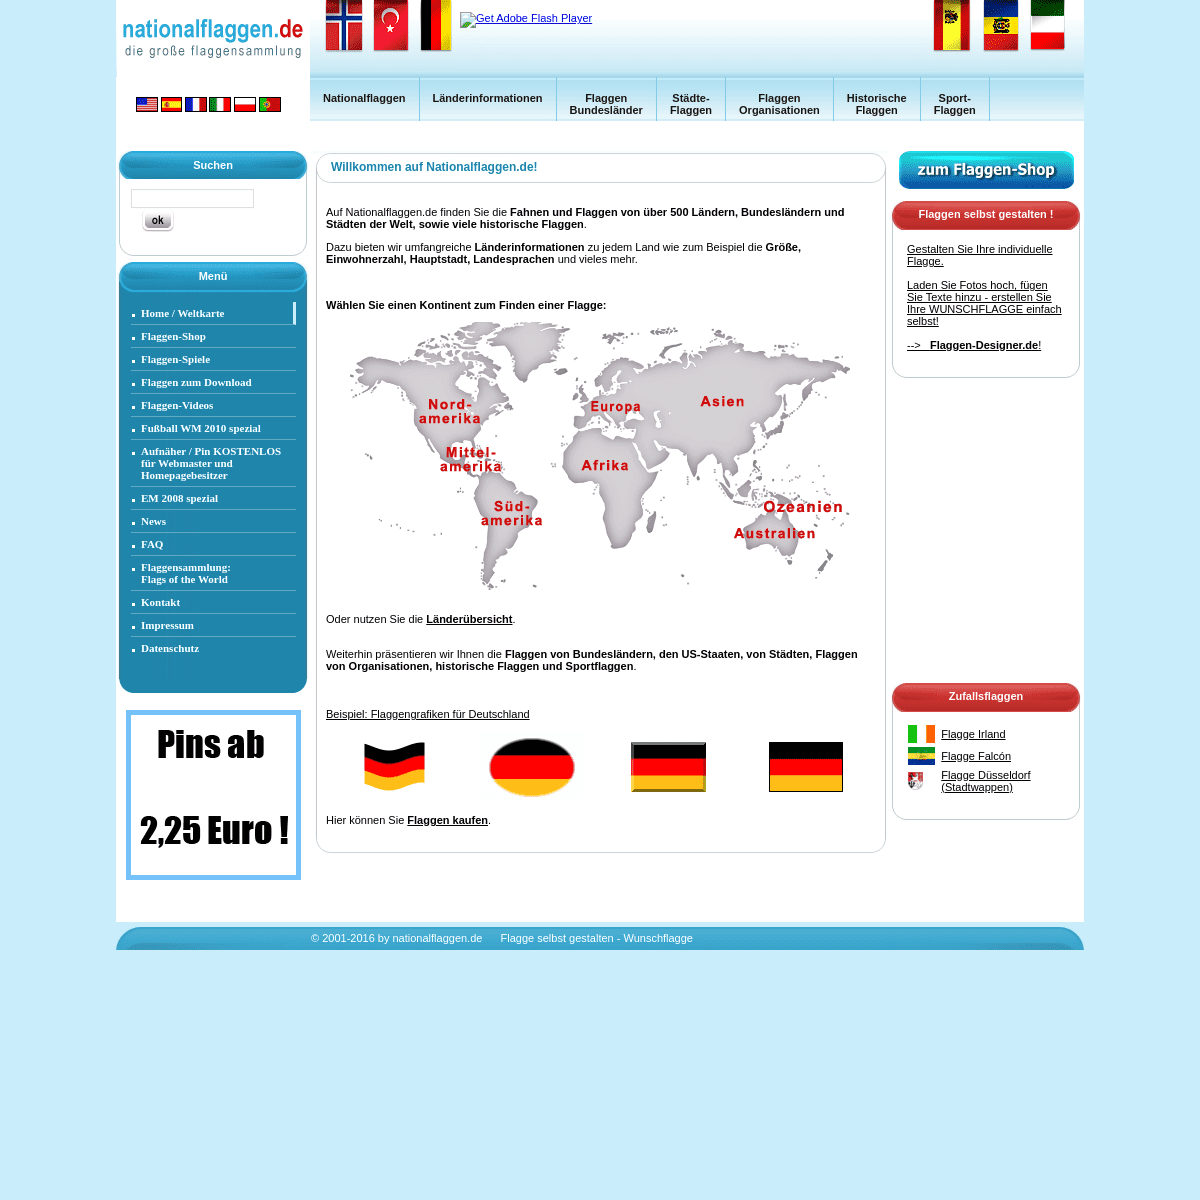 A complete backup of https://nationalflaggen.de